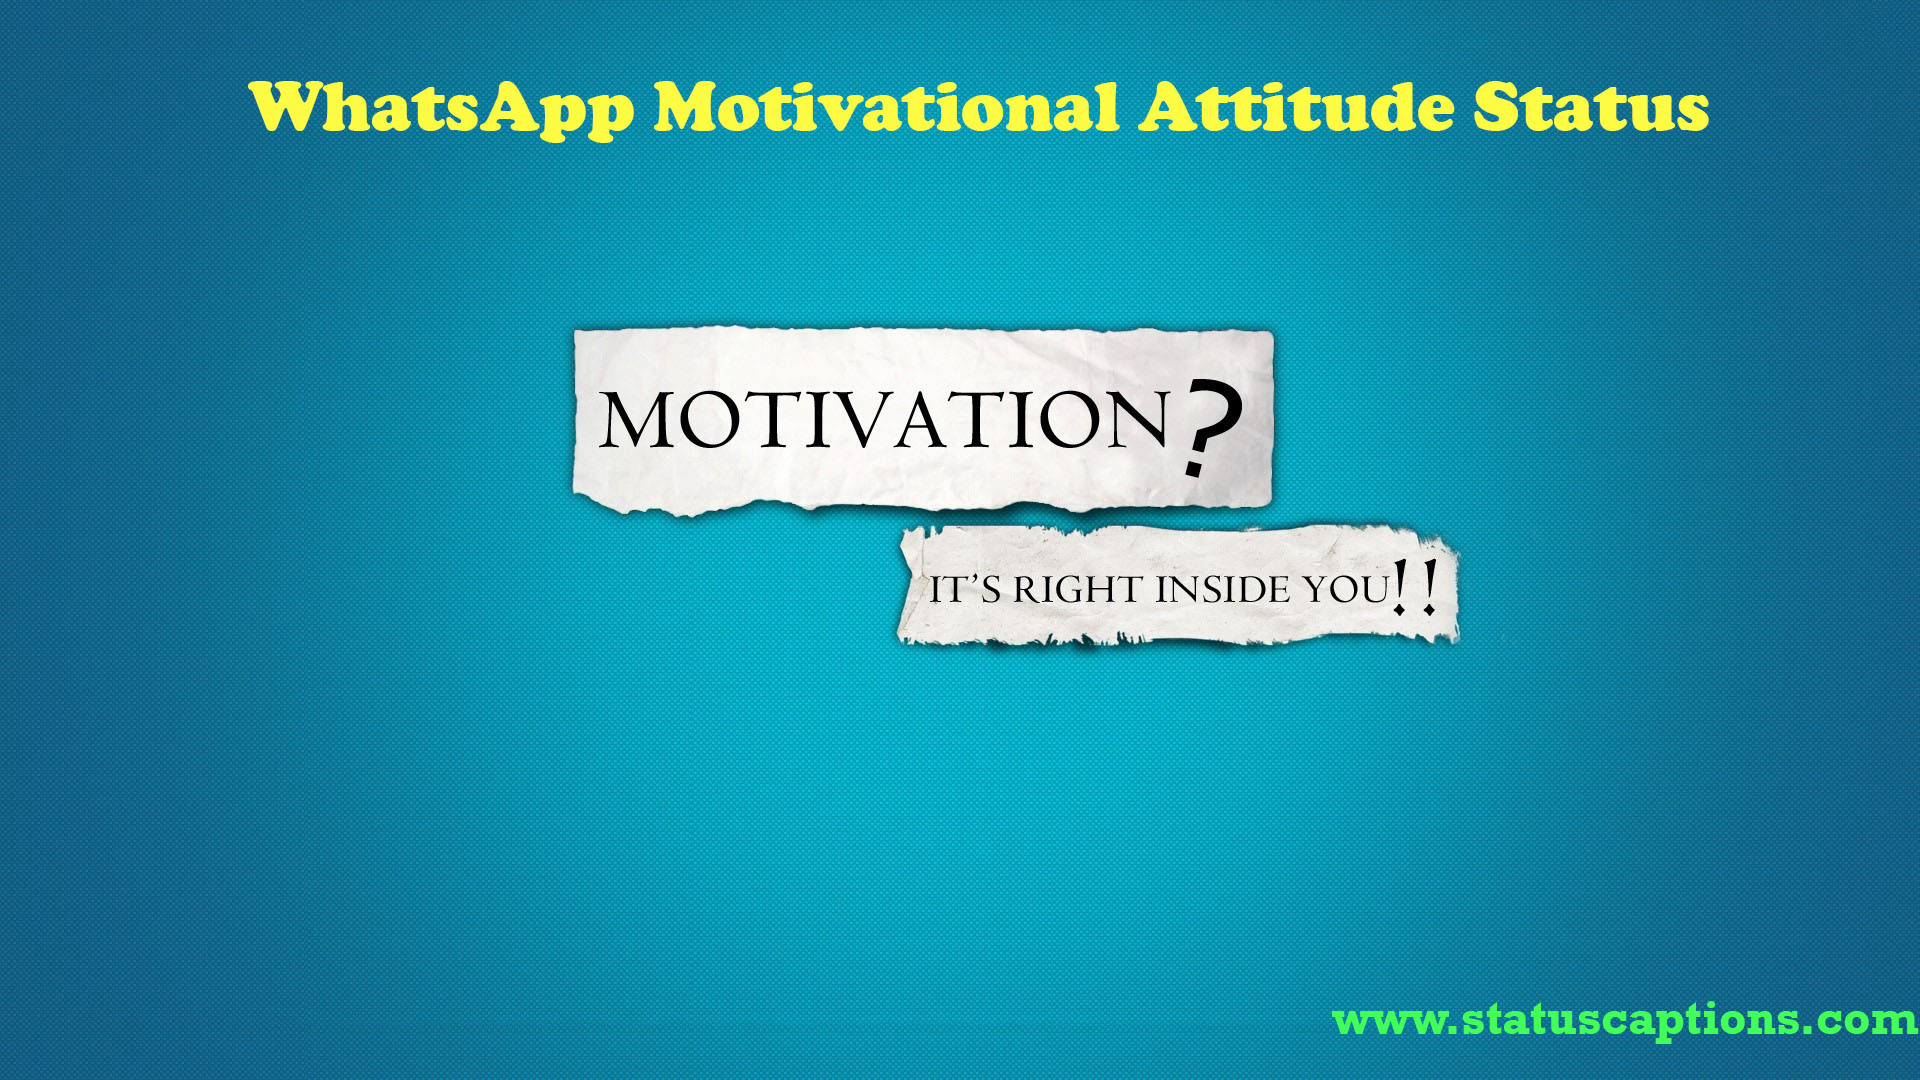 Whatsapp Motivational Attitude Status